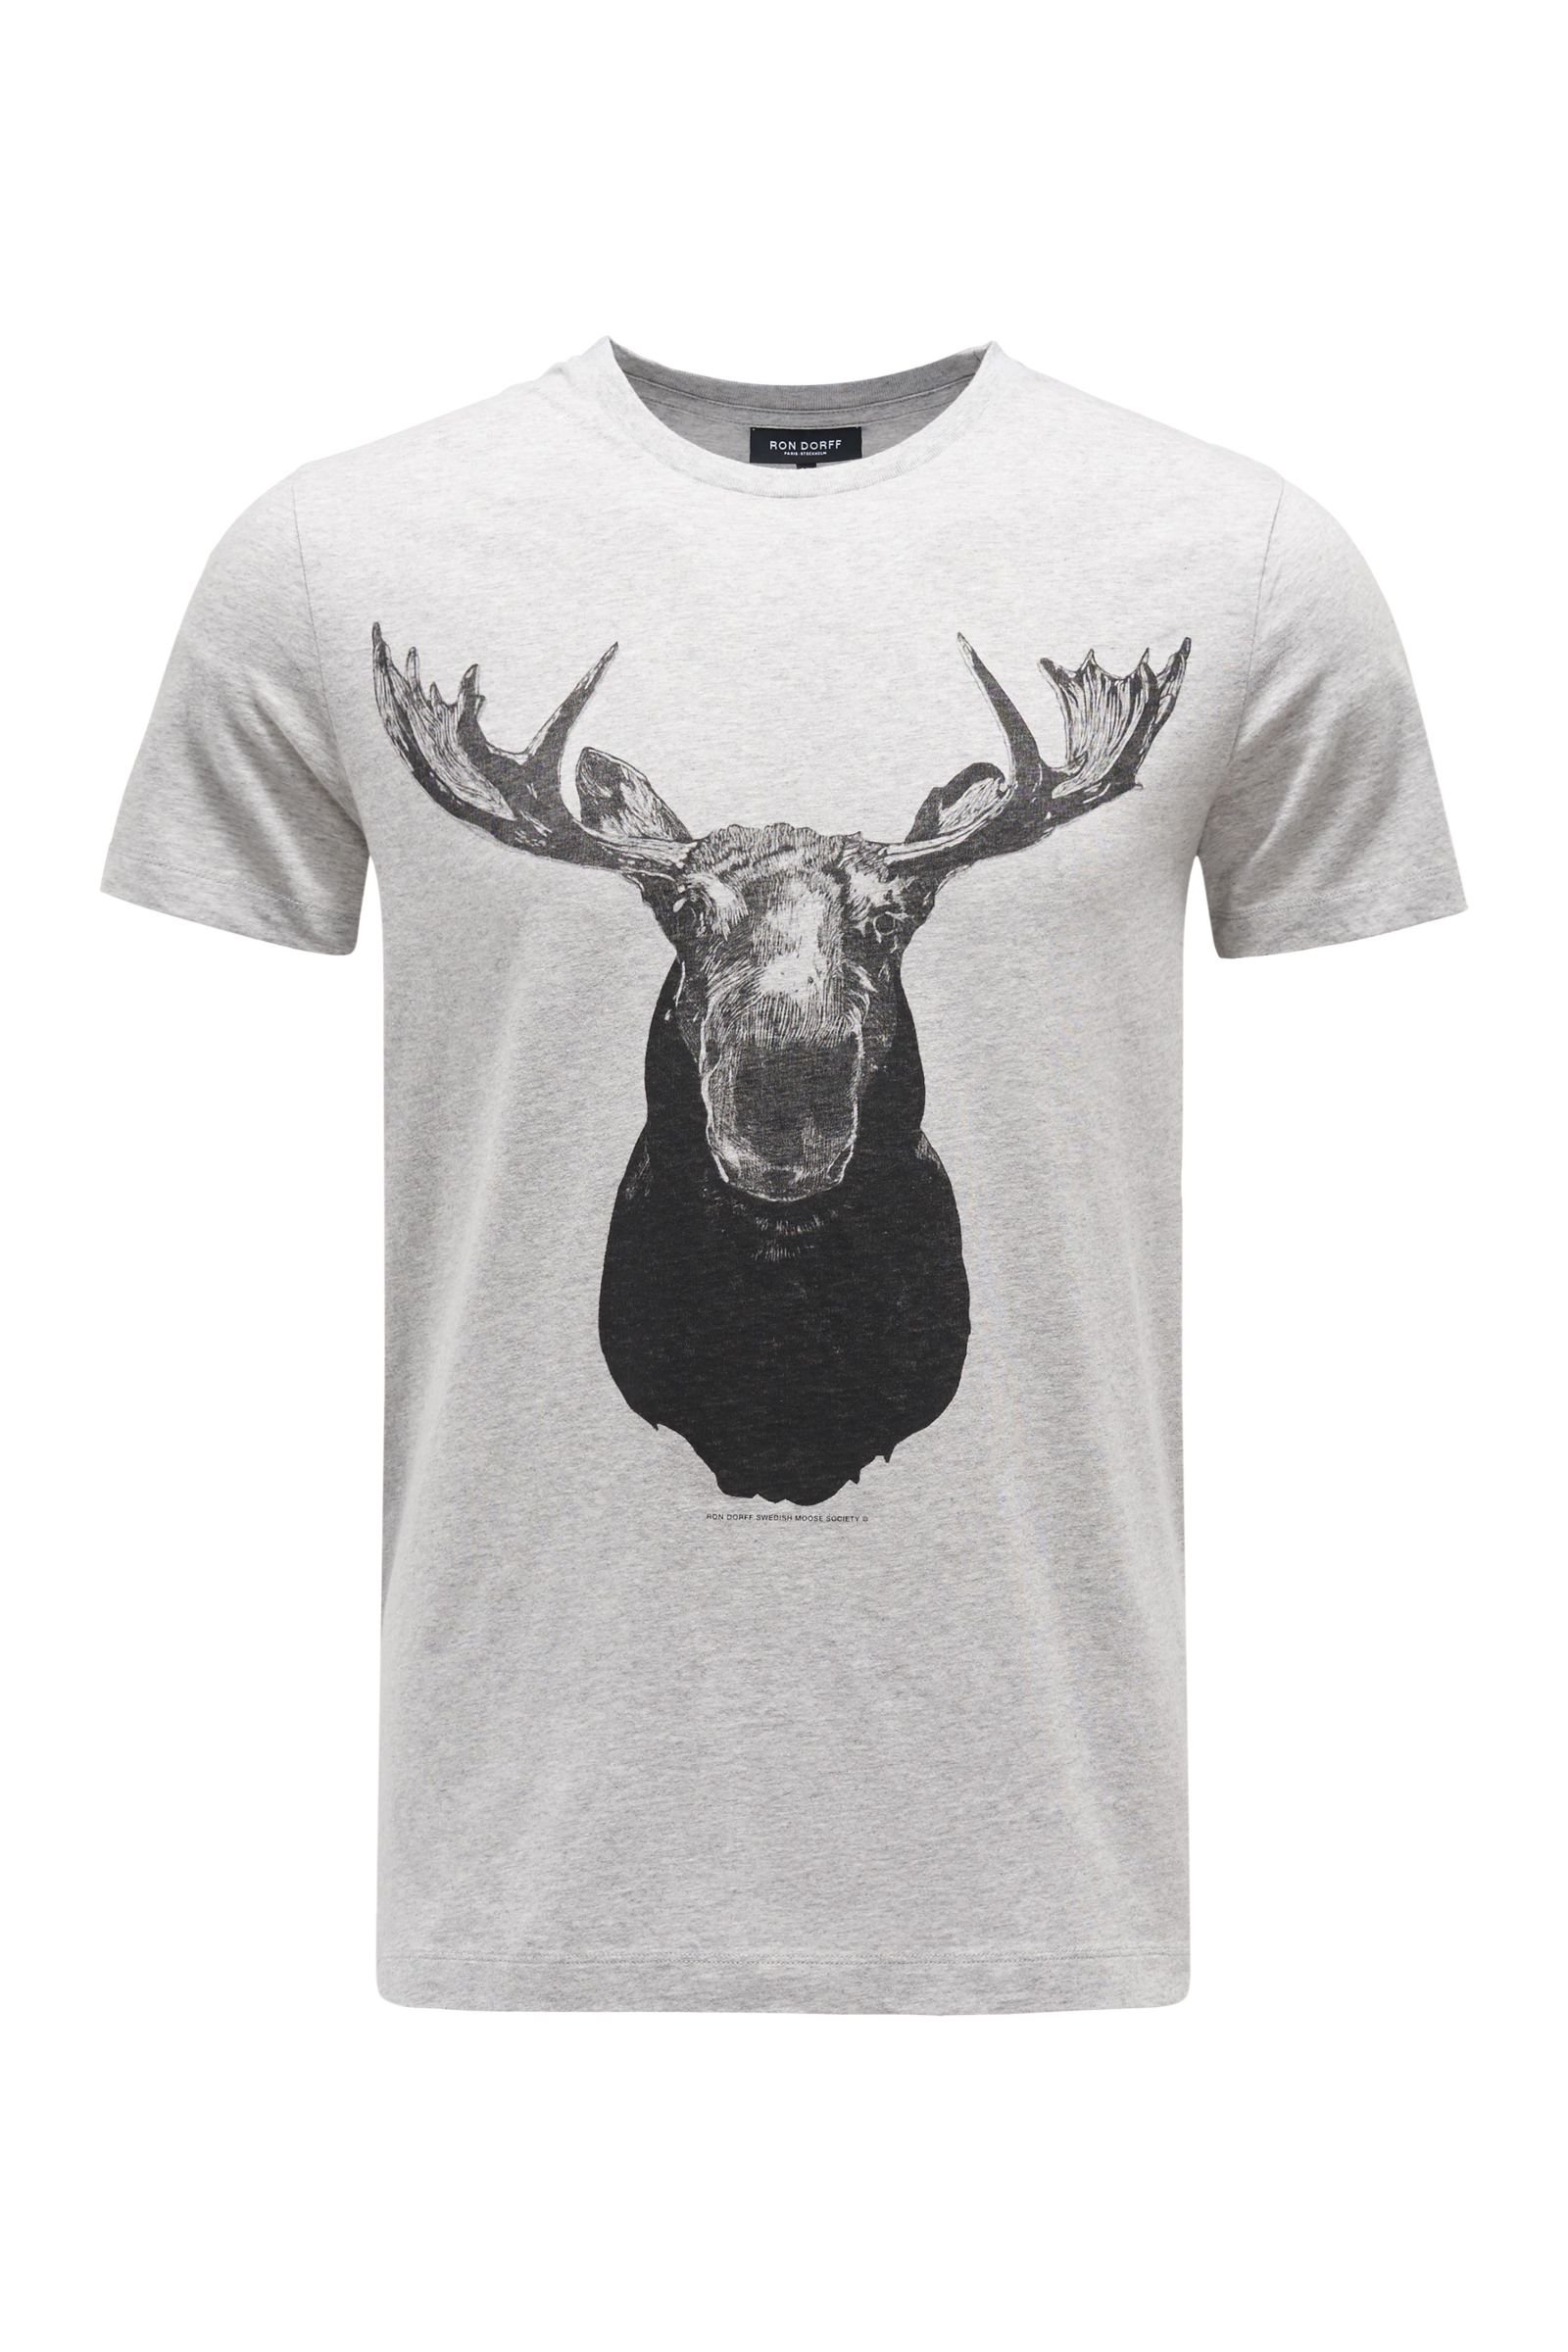 Crew neck T-shirt 'Moose' light grey